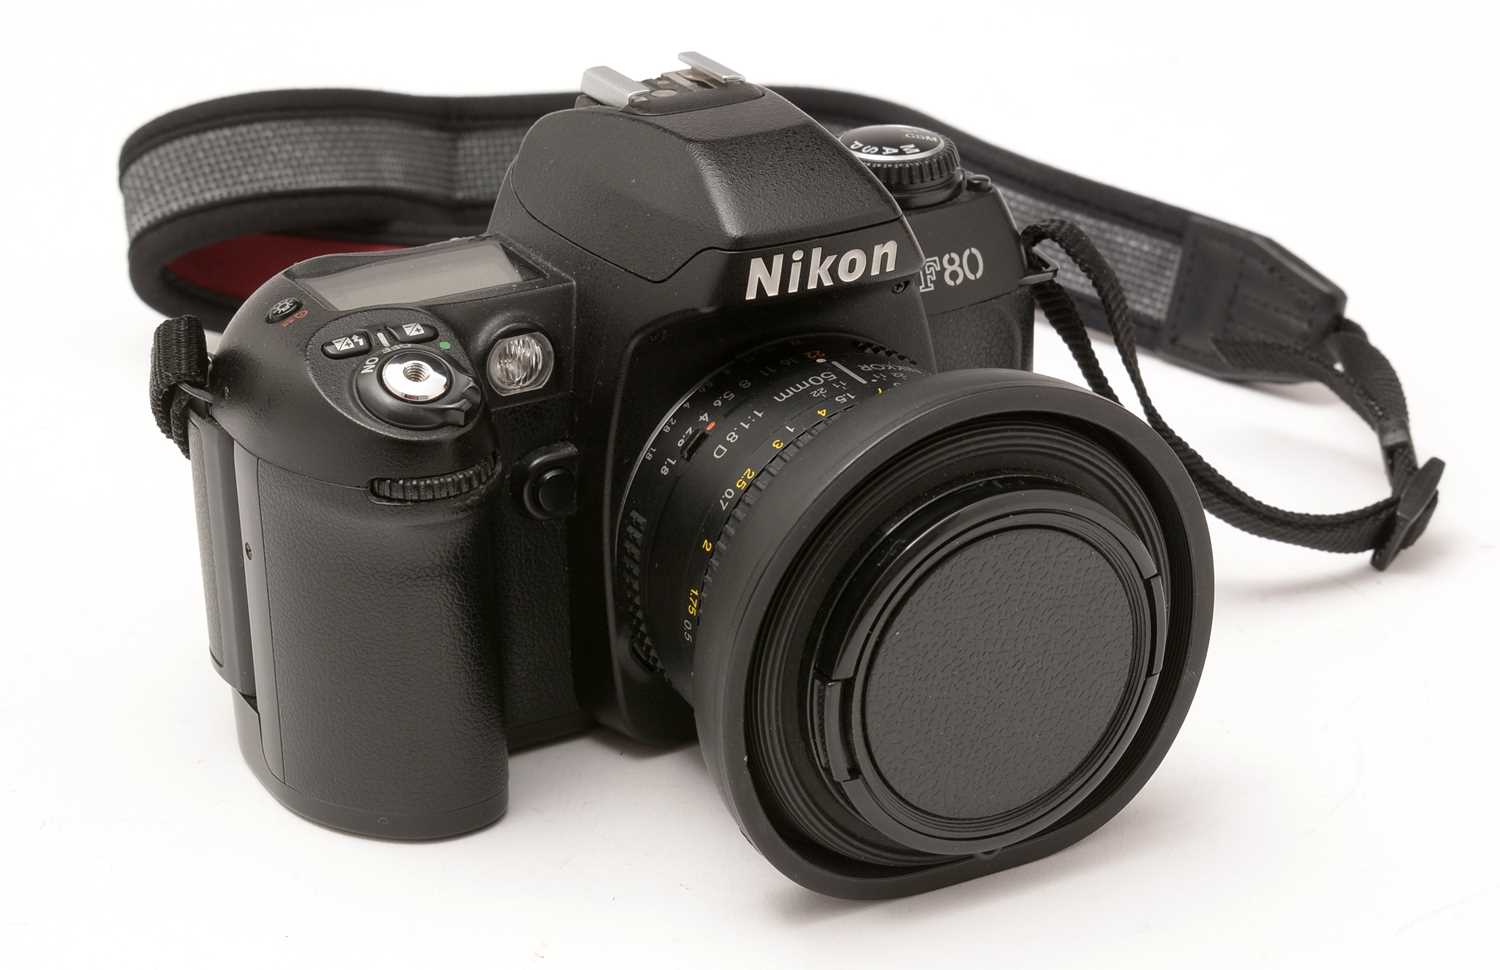 355 - A Nikon F80 film camera.